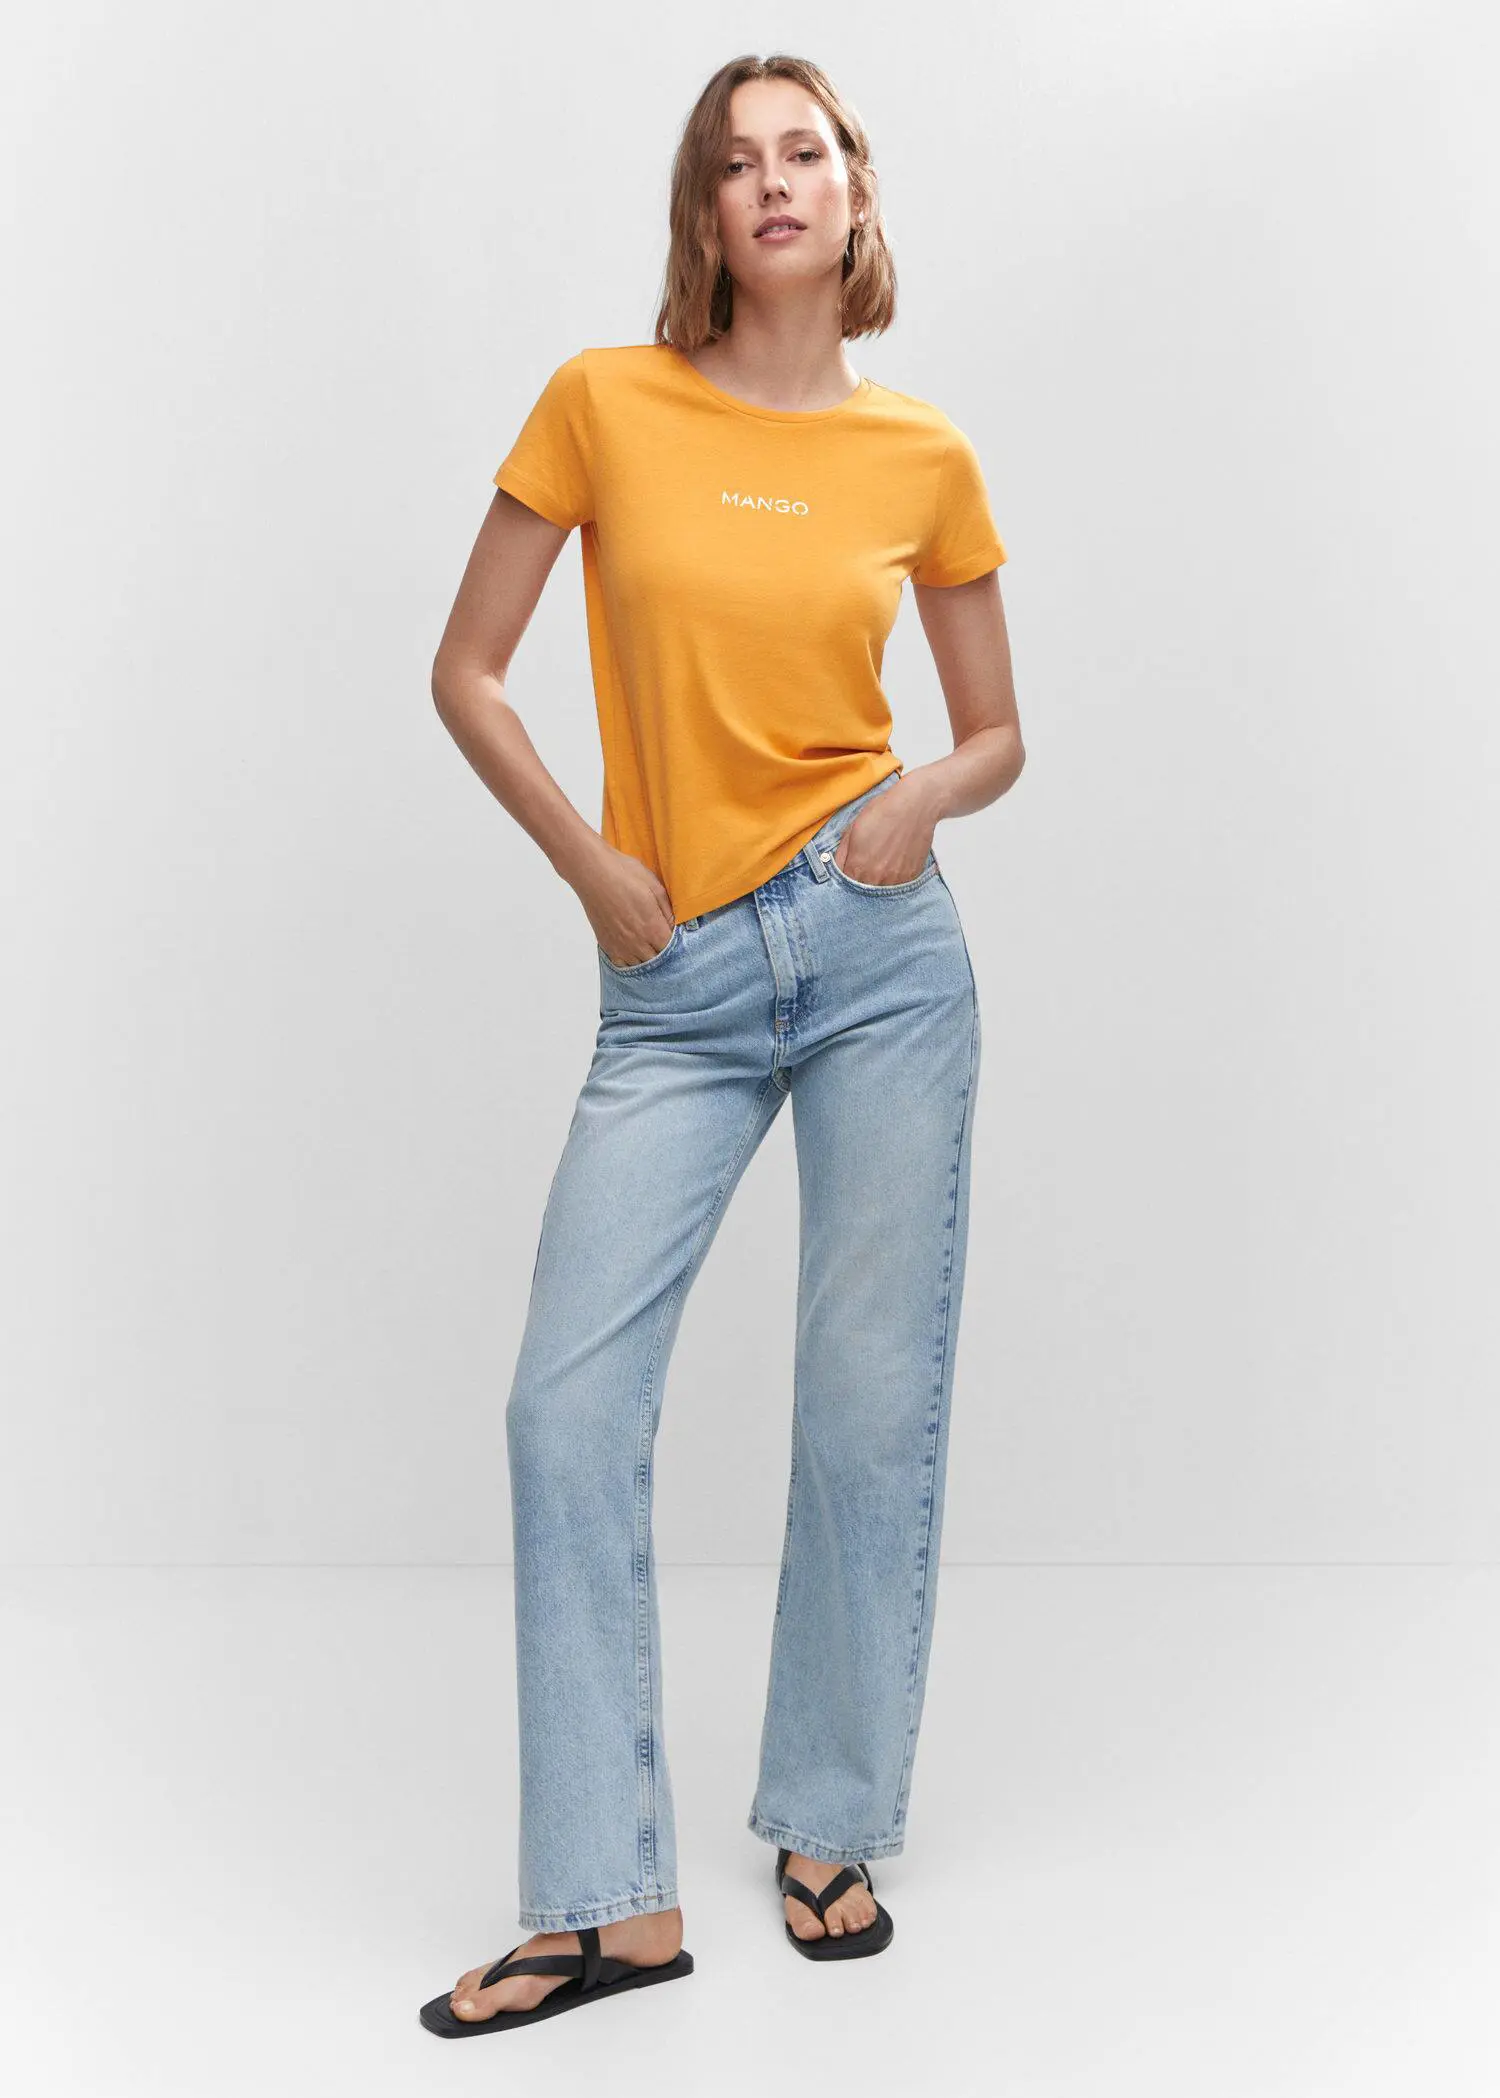 Mango Metallic logo T-shirt. a woman in a yellow shirt and blue jeans. 